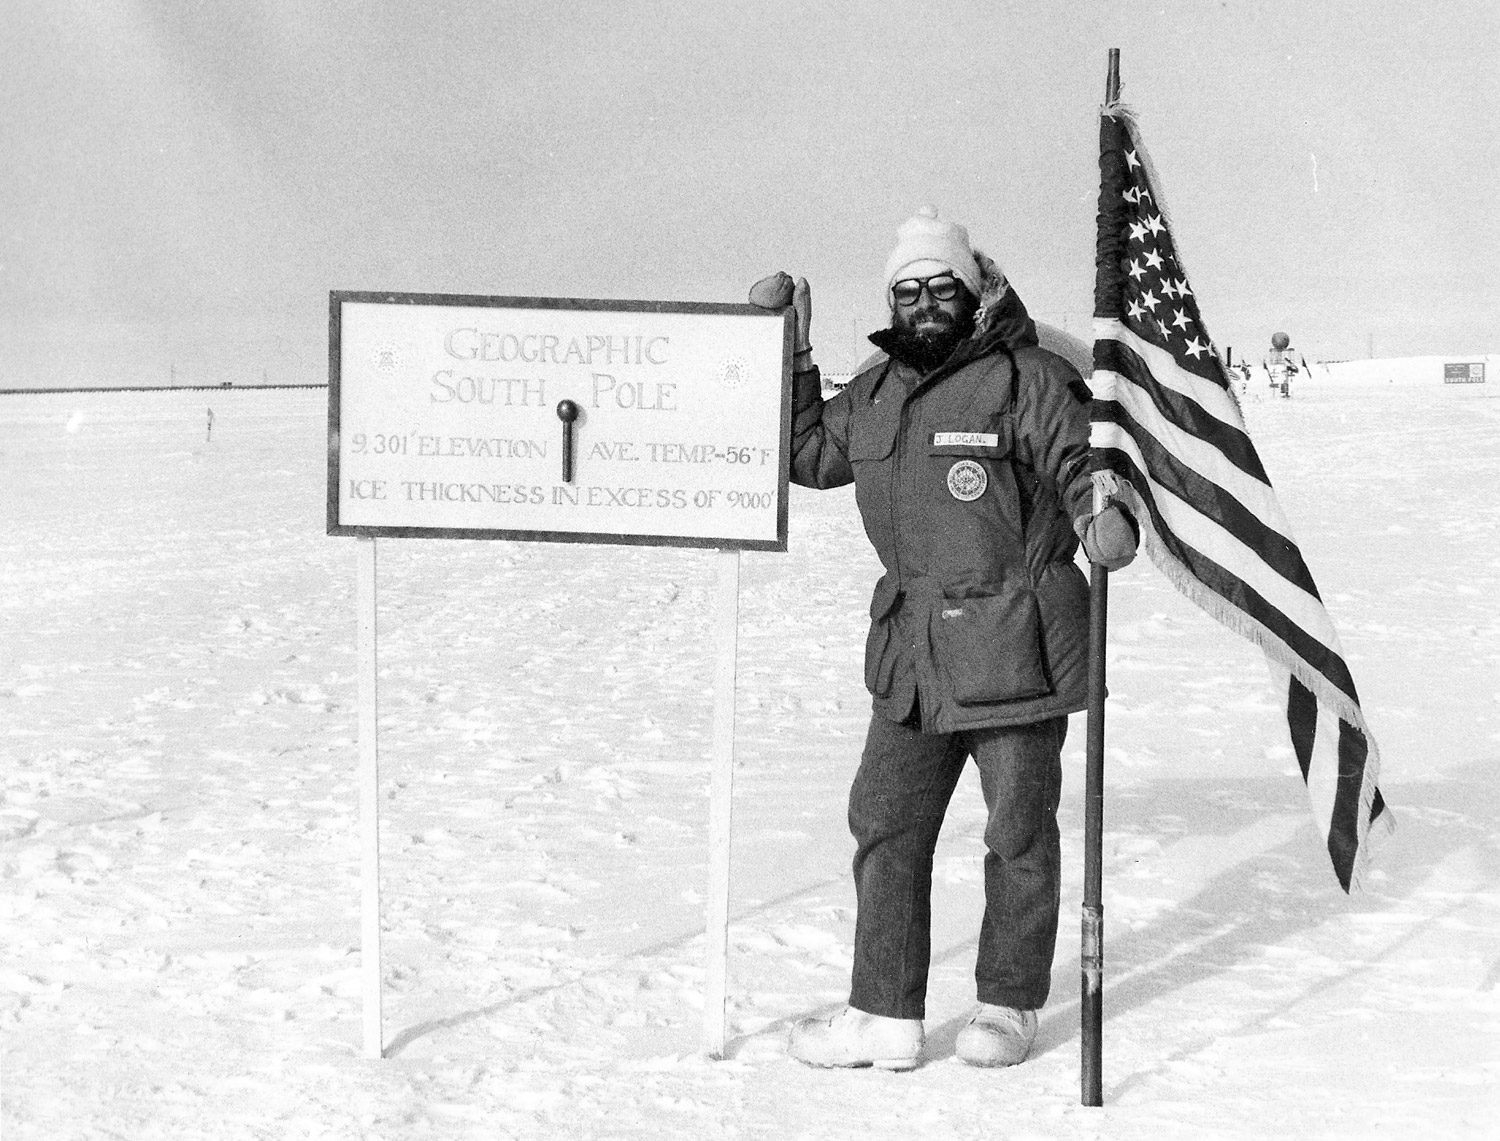 Jim Logan at South Pole